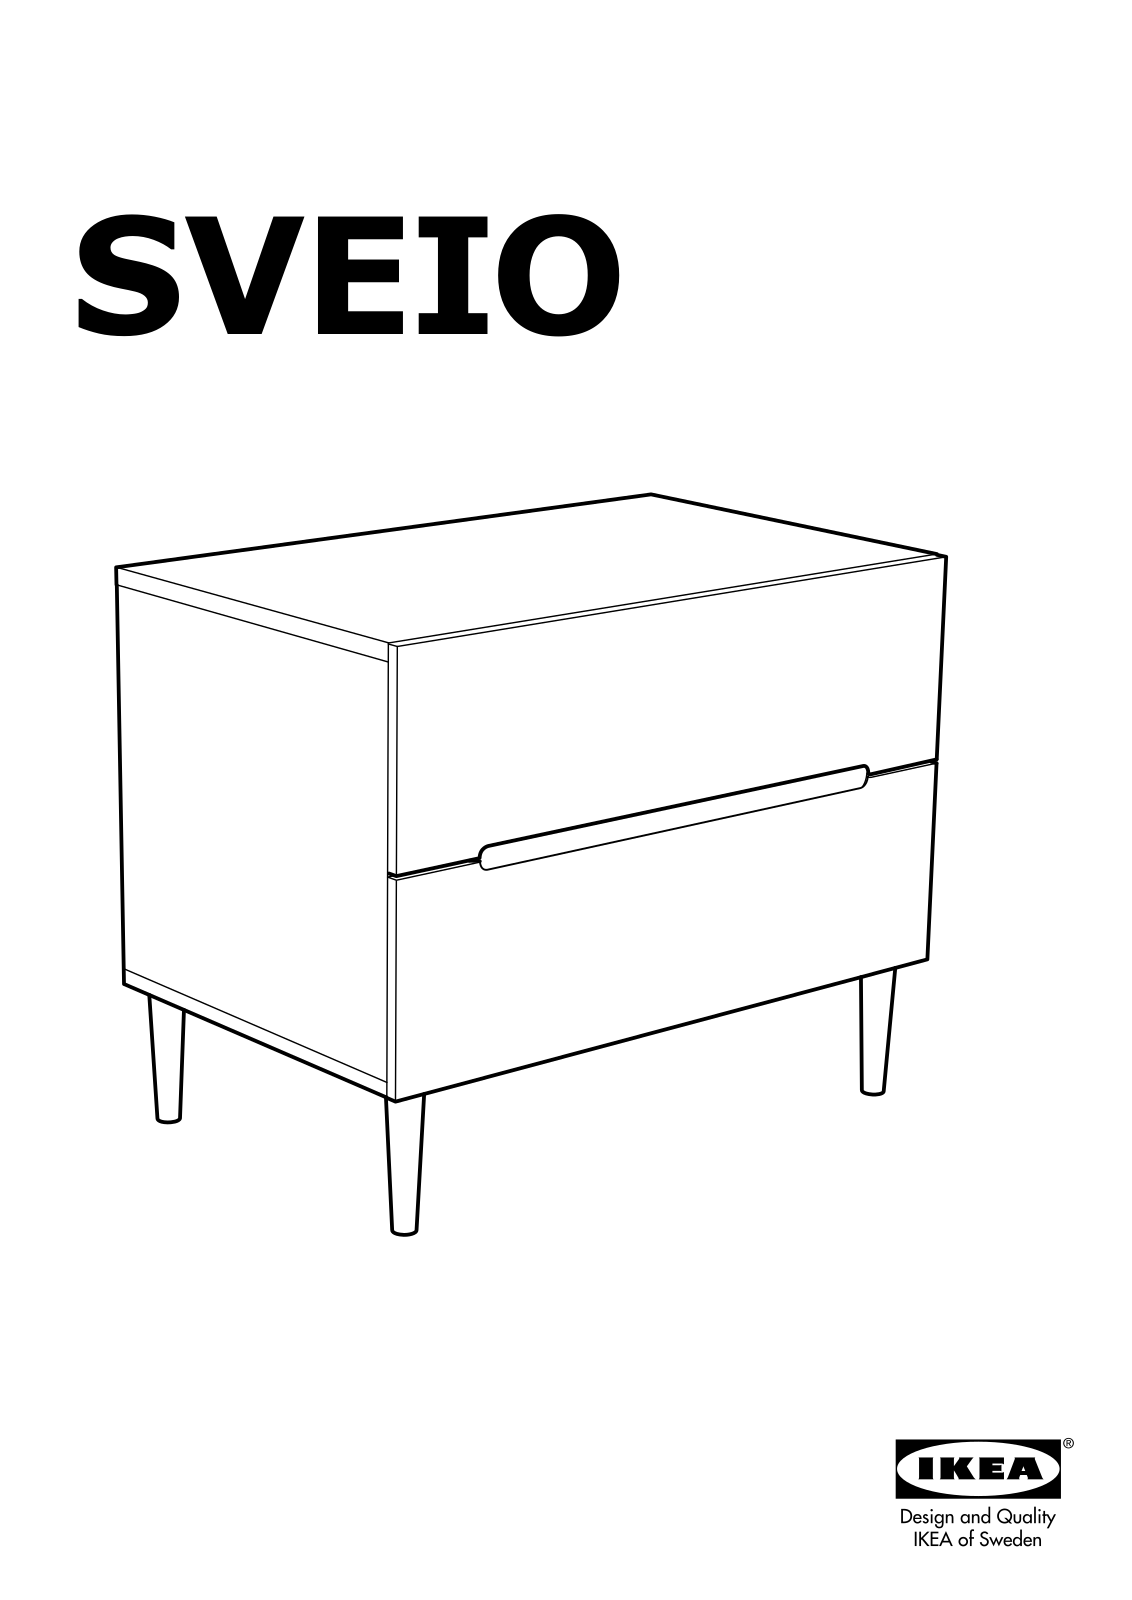 IKEA SVEIO User Manual